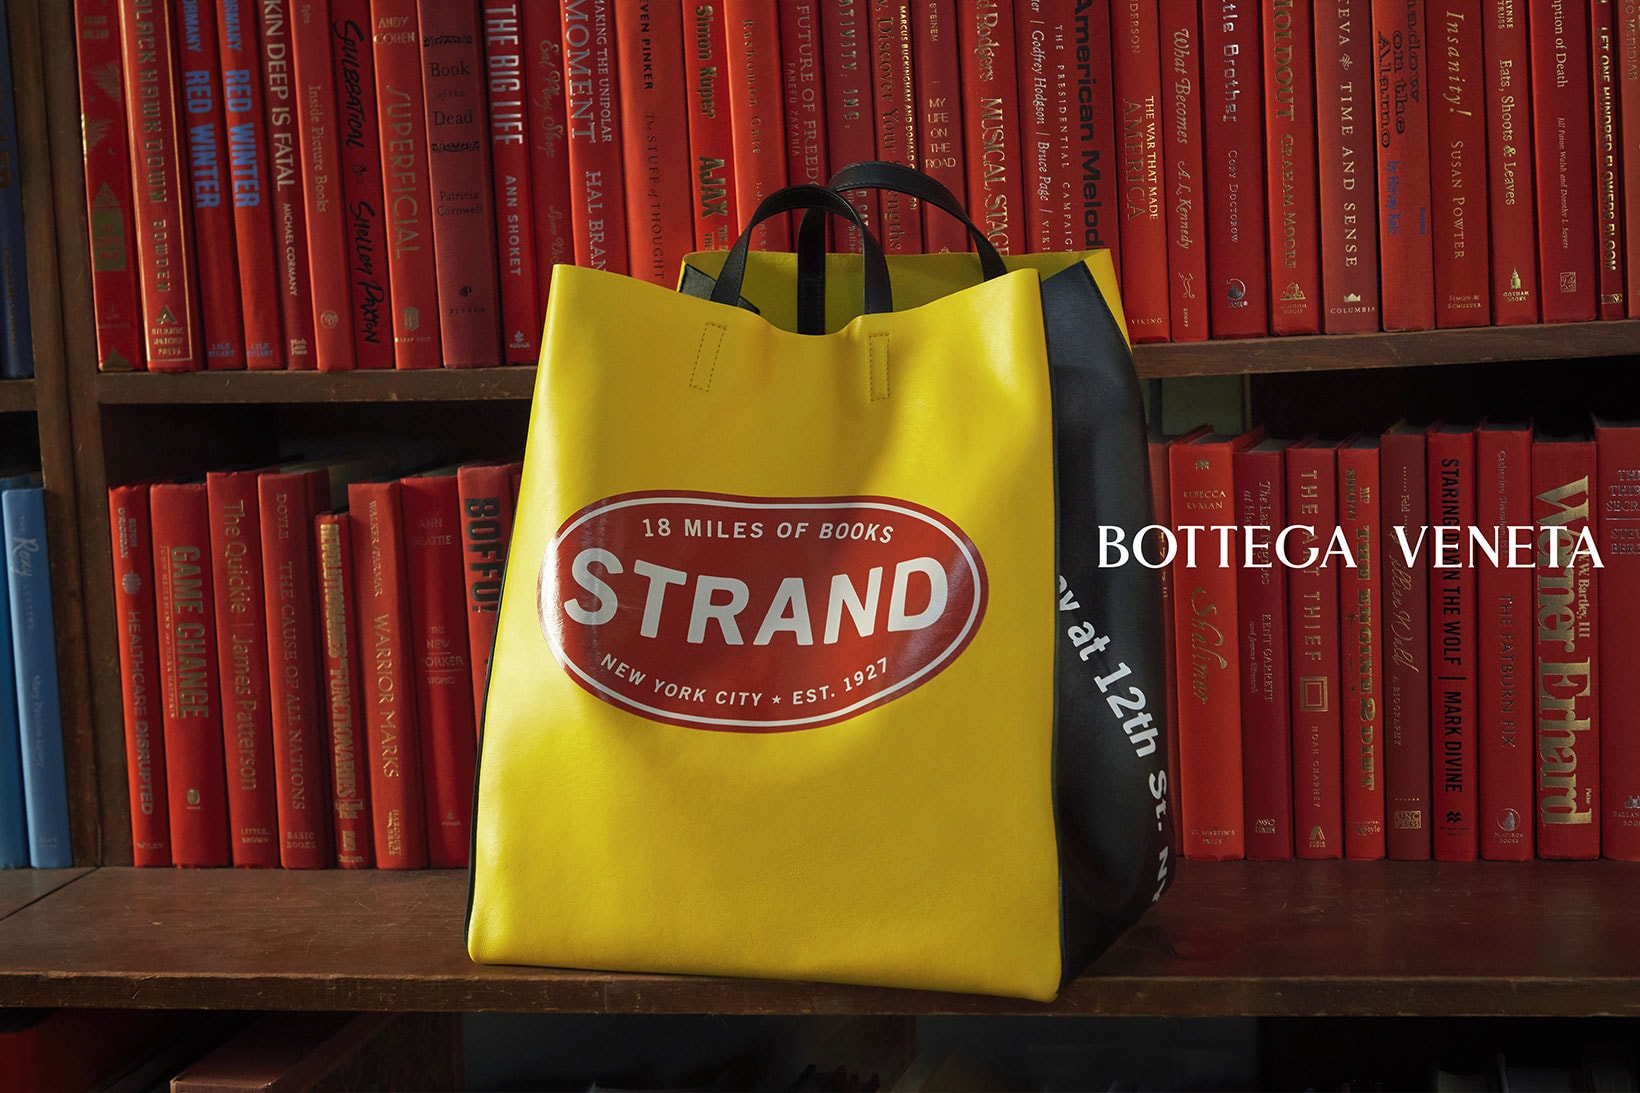 Bottega Veneta Strand Book Store Tote Bags NYC Limited Edition Release Info